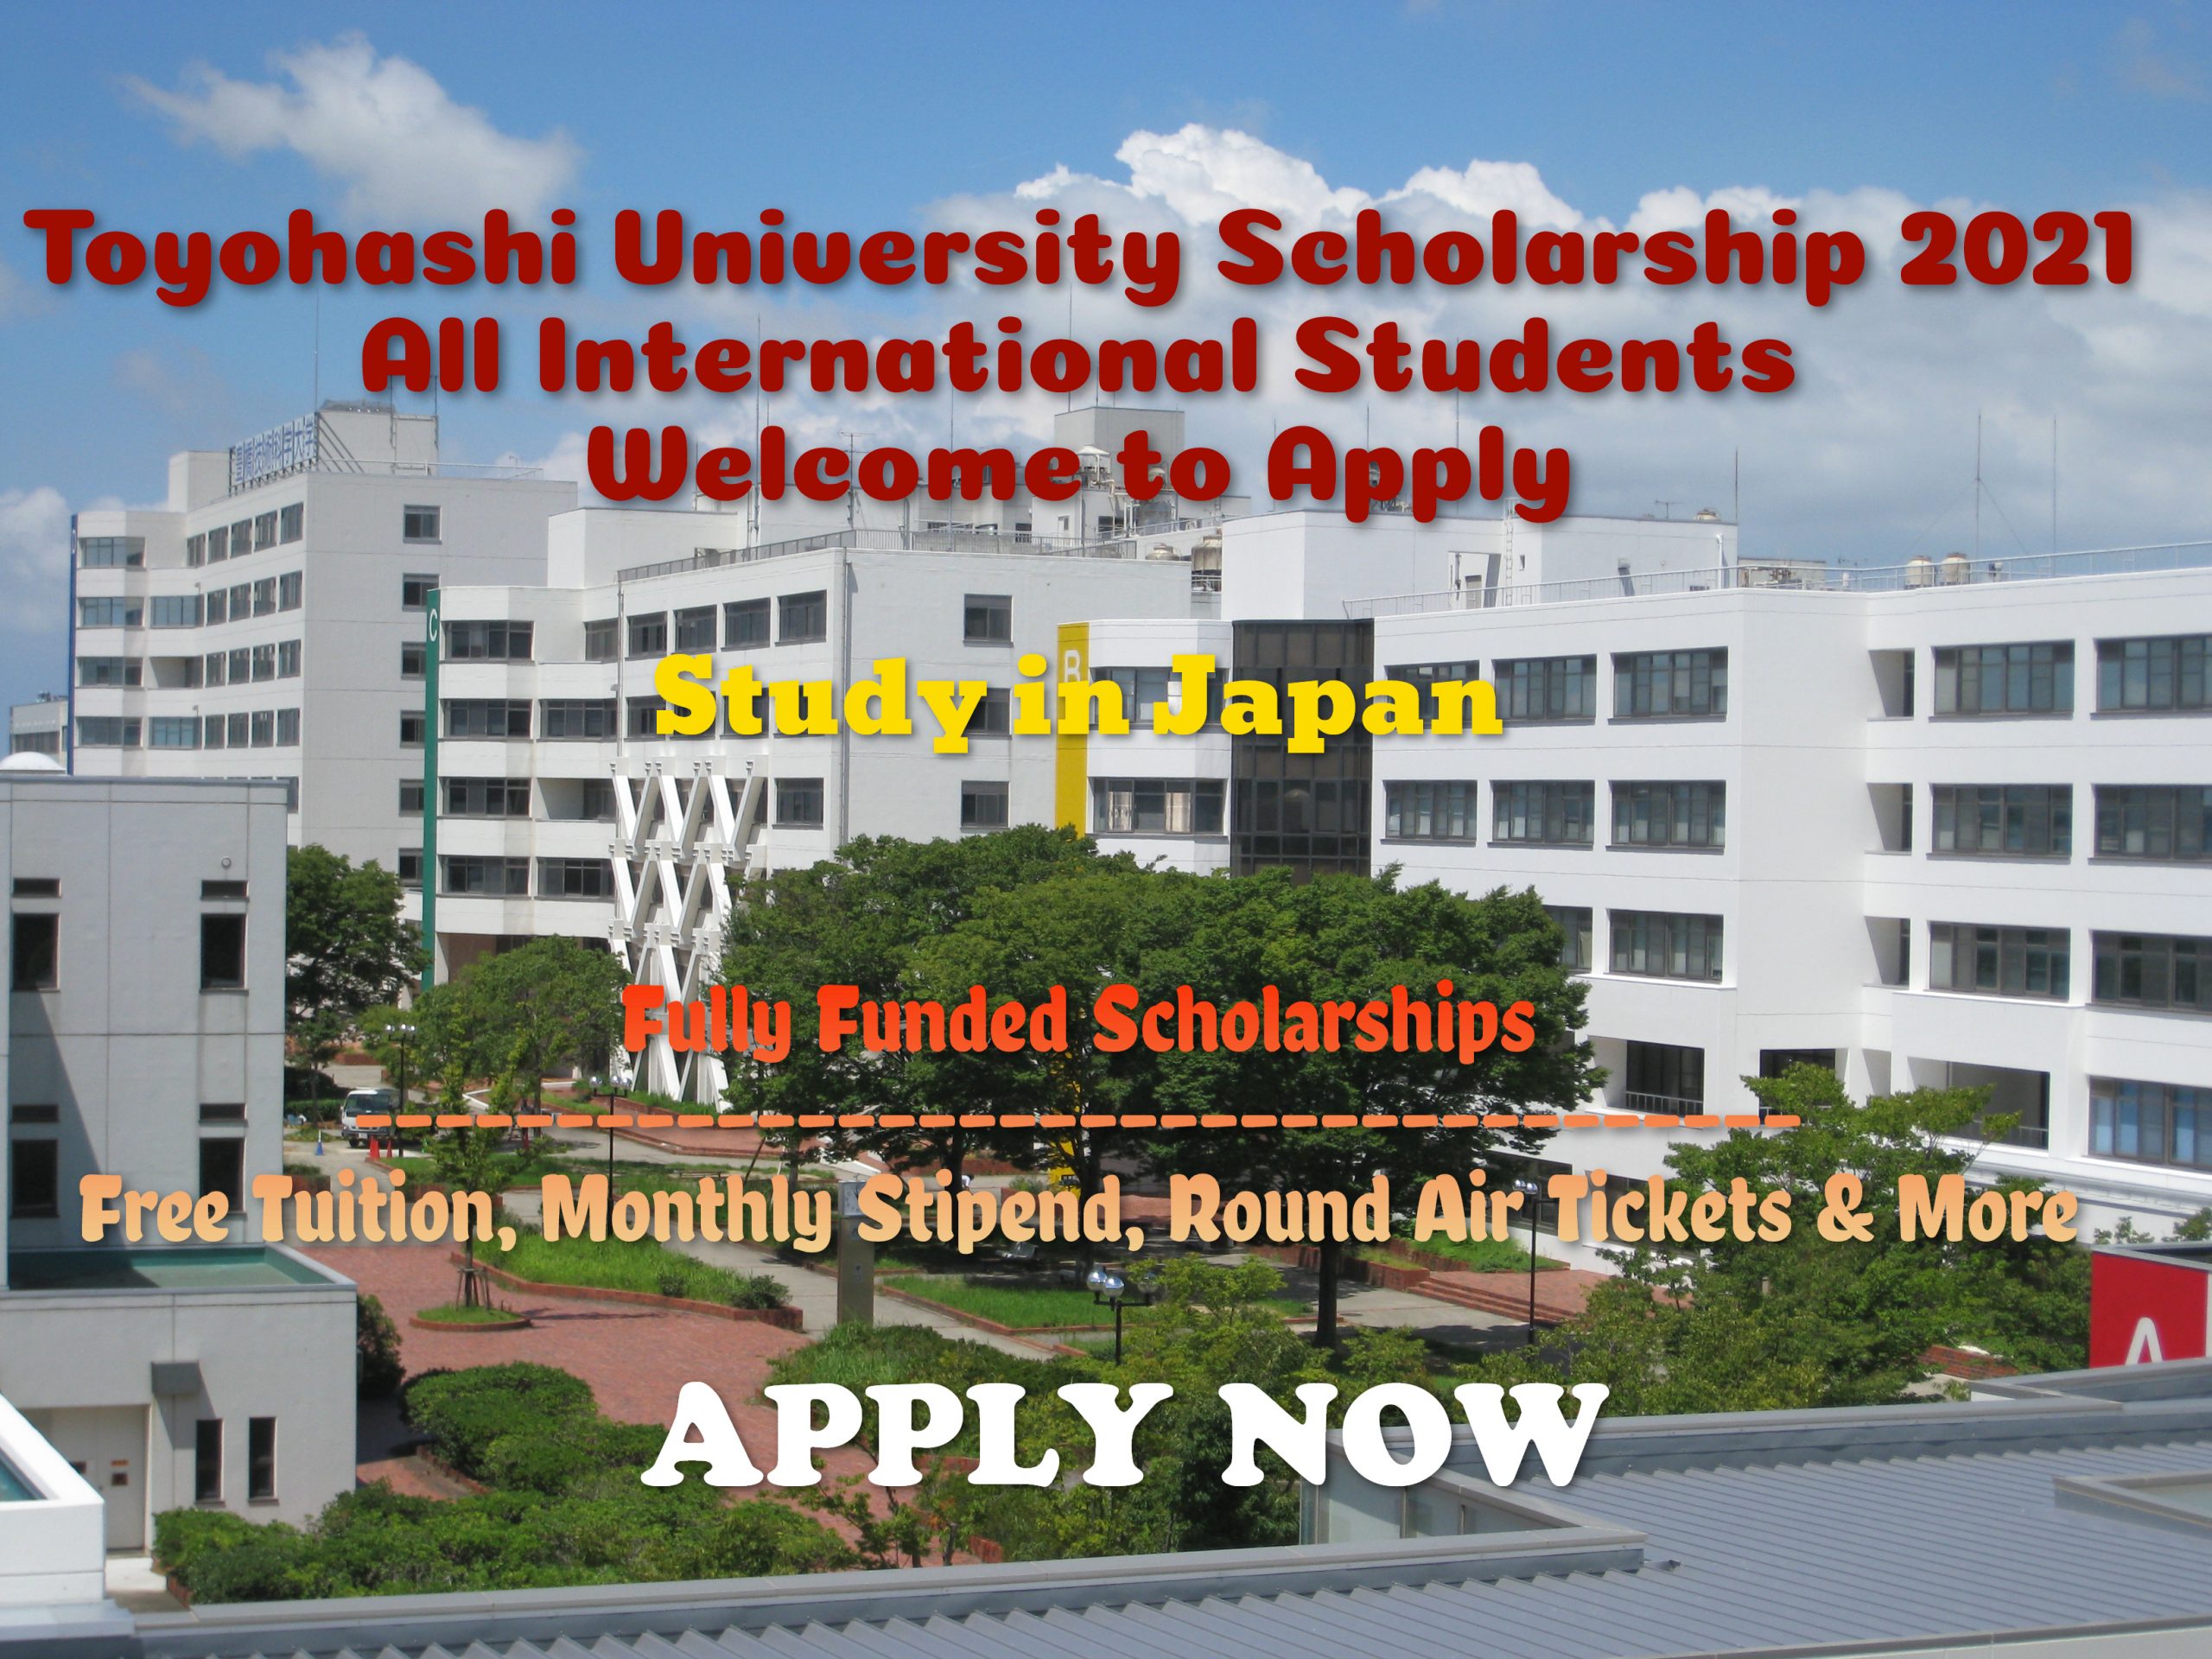 Toyohashi University Scholarship 2021